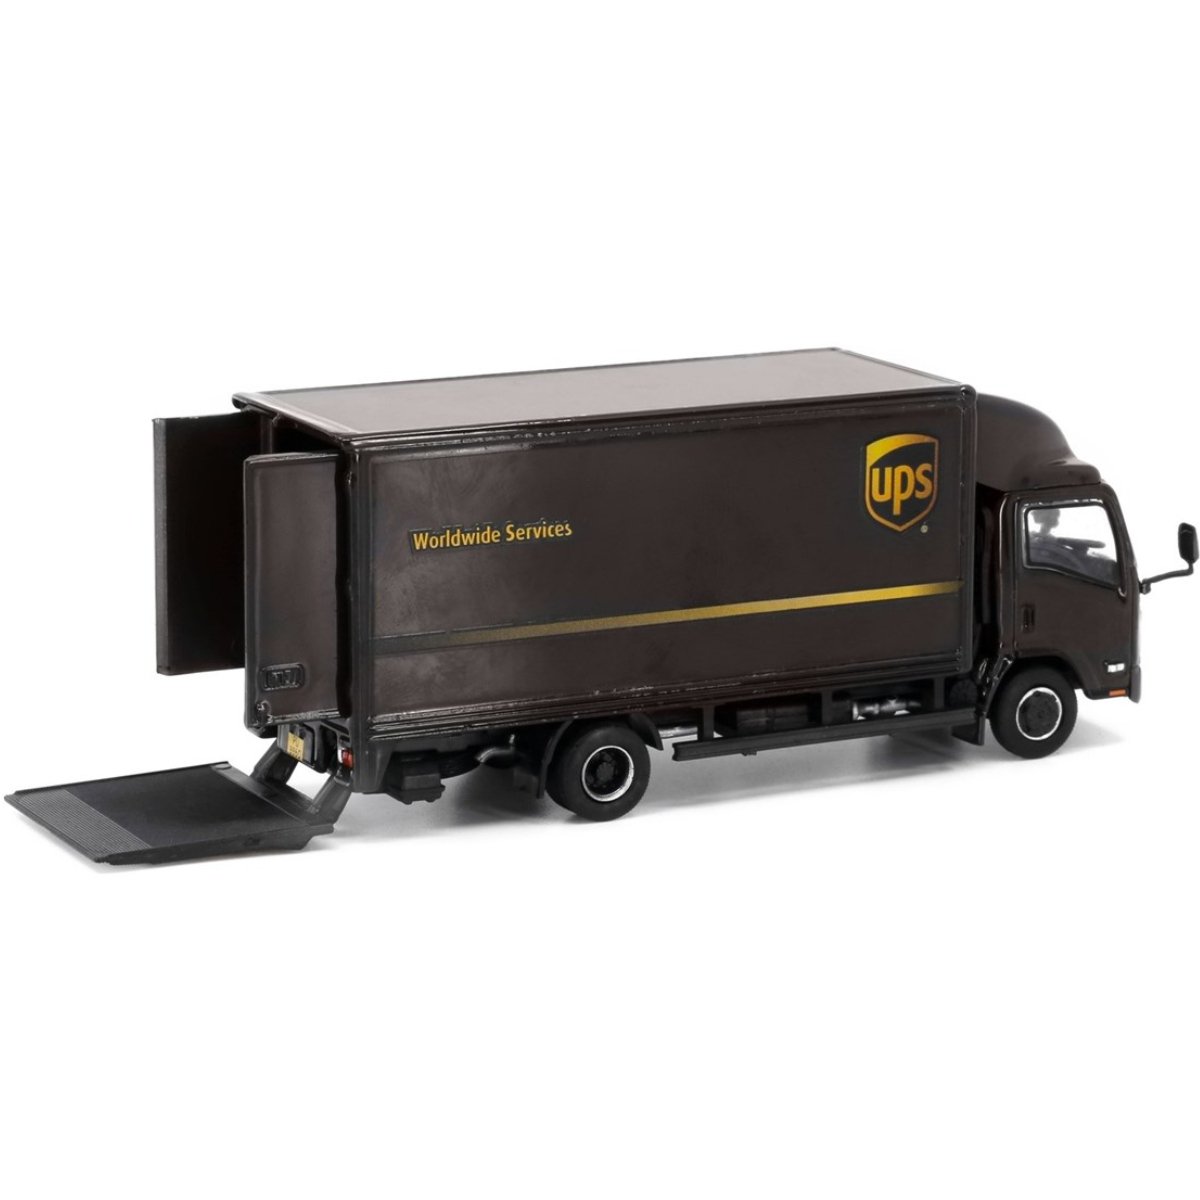 Tiny Models Isuzu N Series Box Lorry UPS (1:64 Scale) - Phillips Hobbies